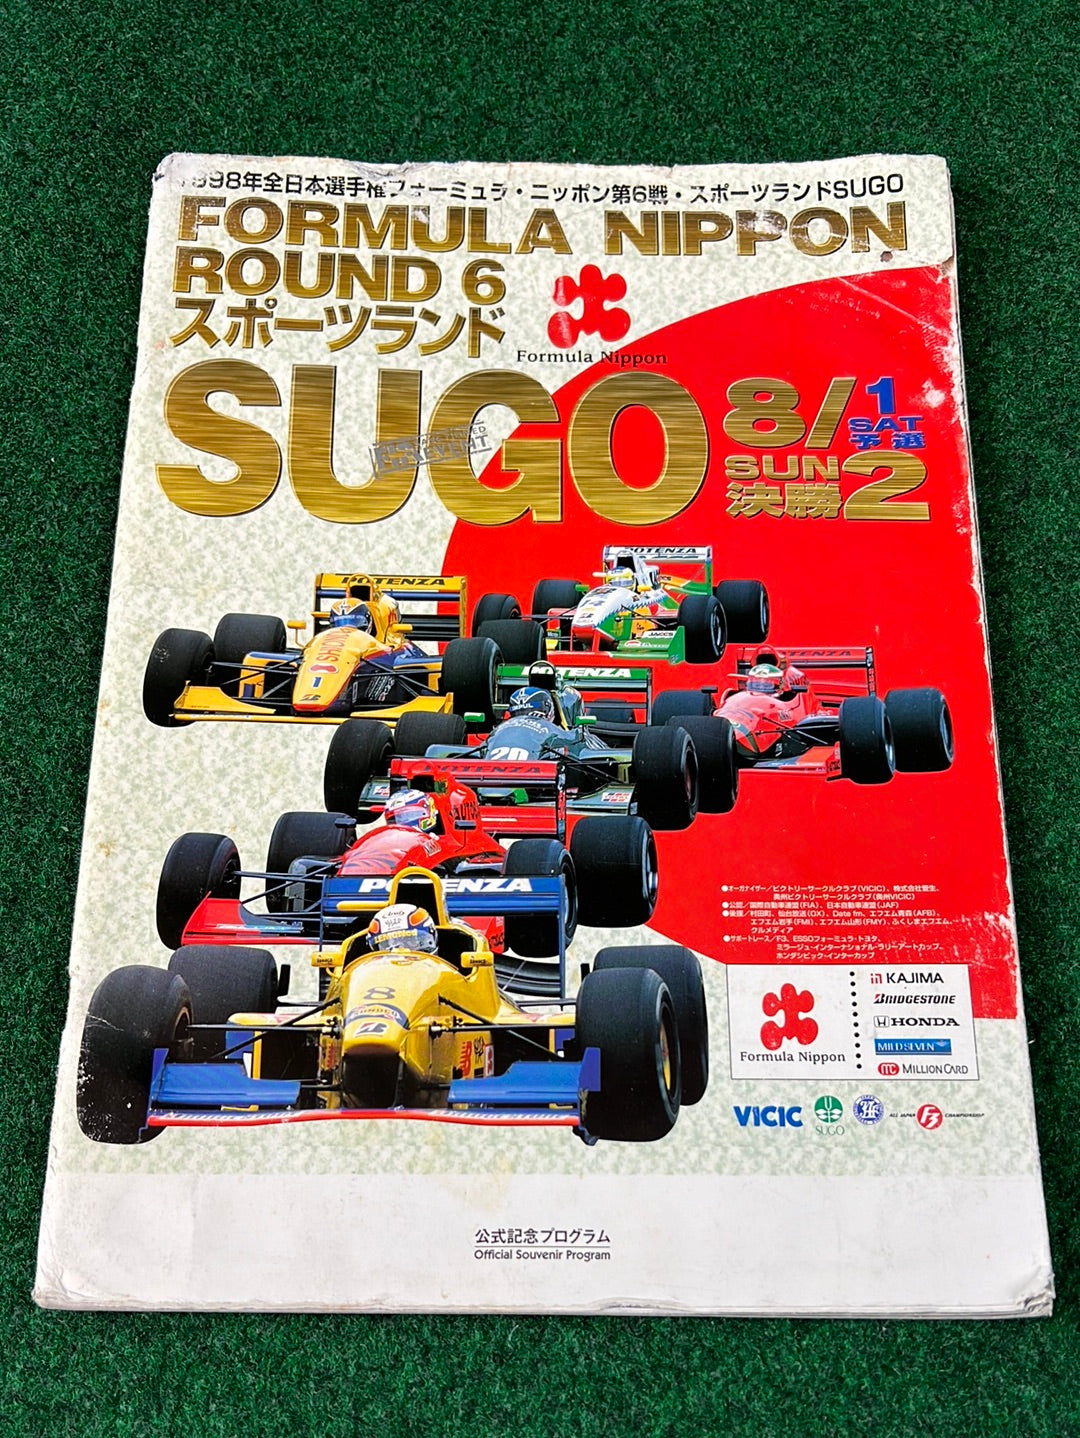 Formula Nippon - 1997, 1998, 1999 SUGO Race Event Programs Set of 3